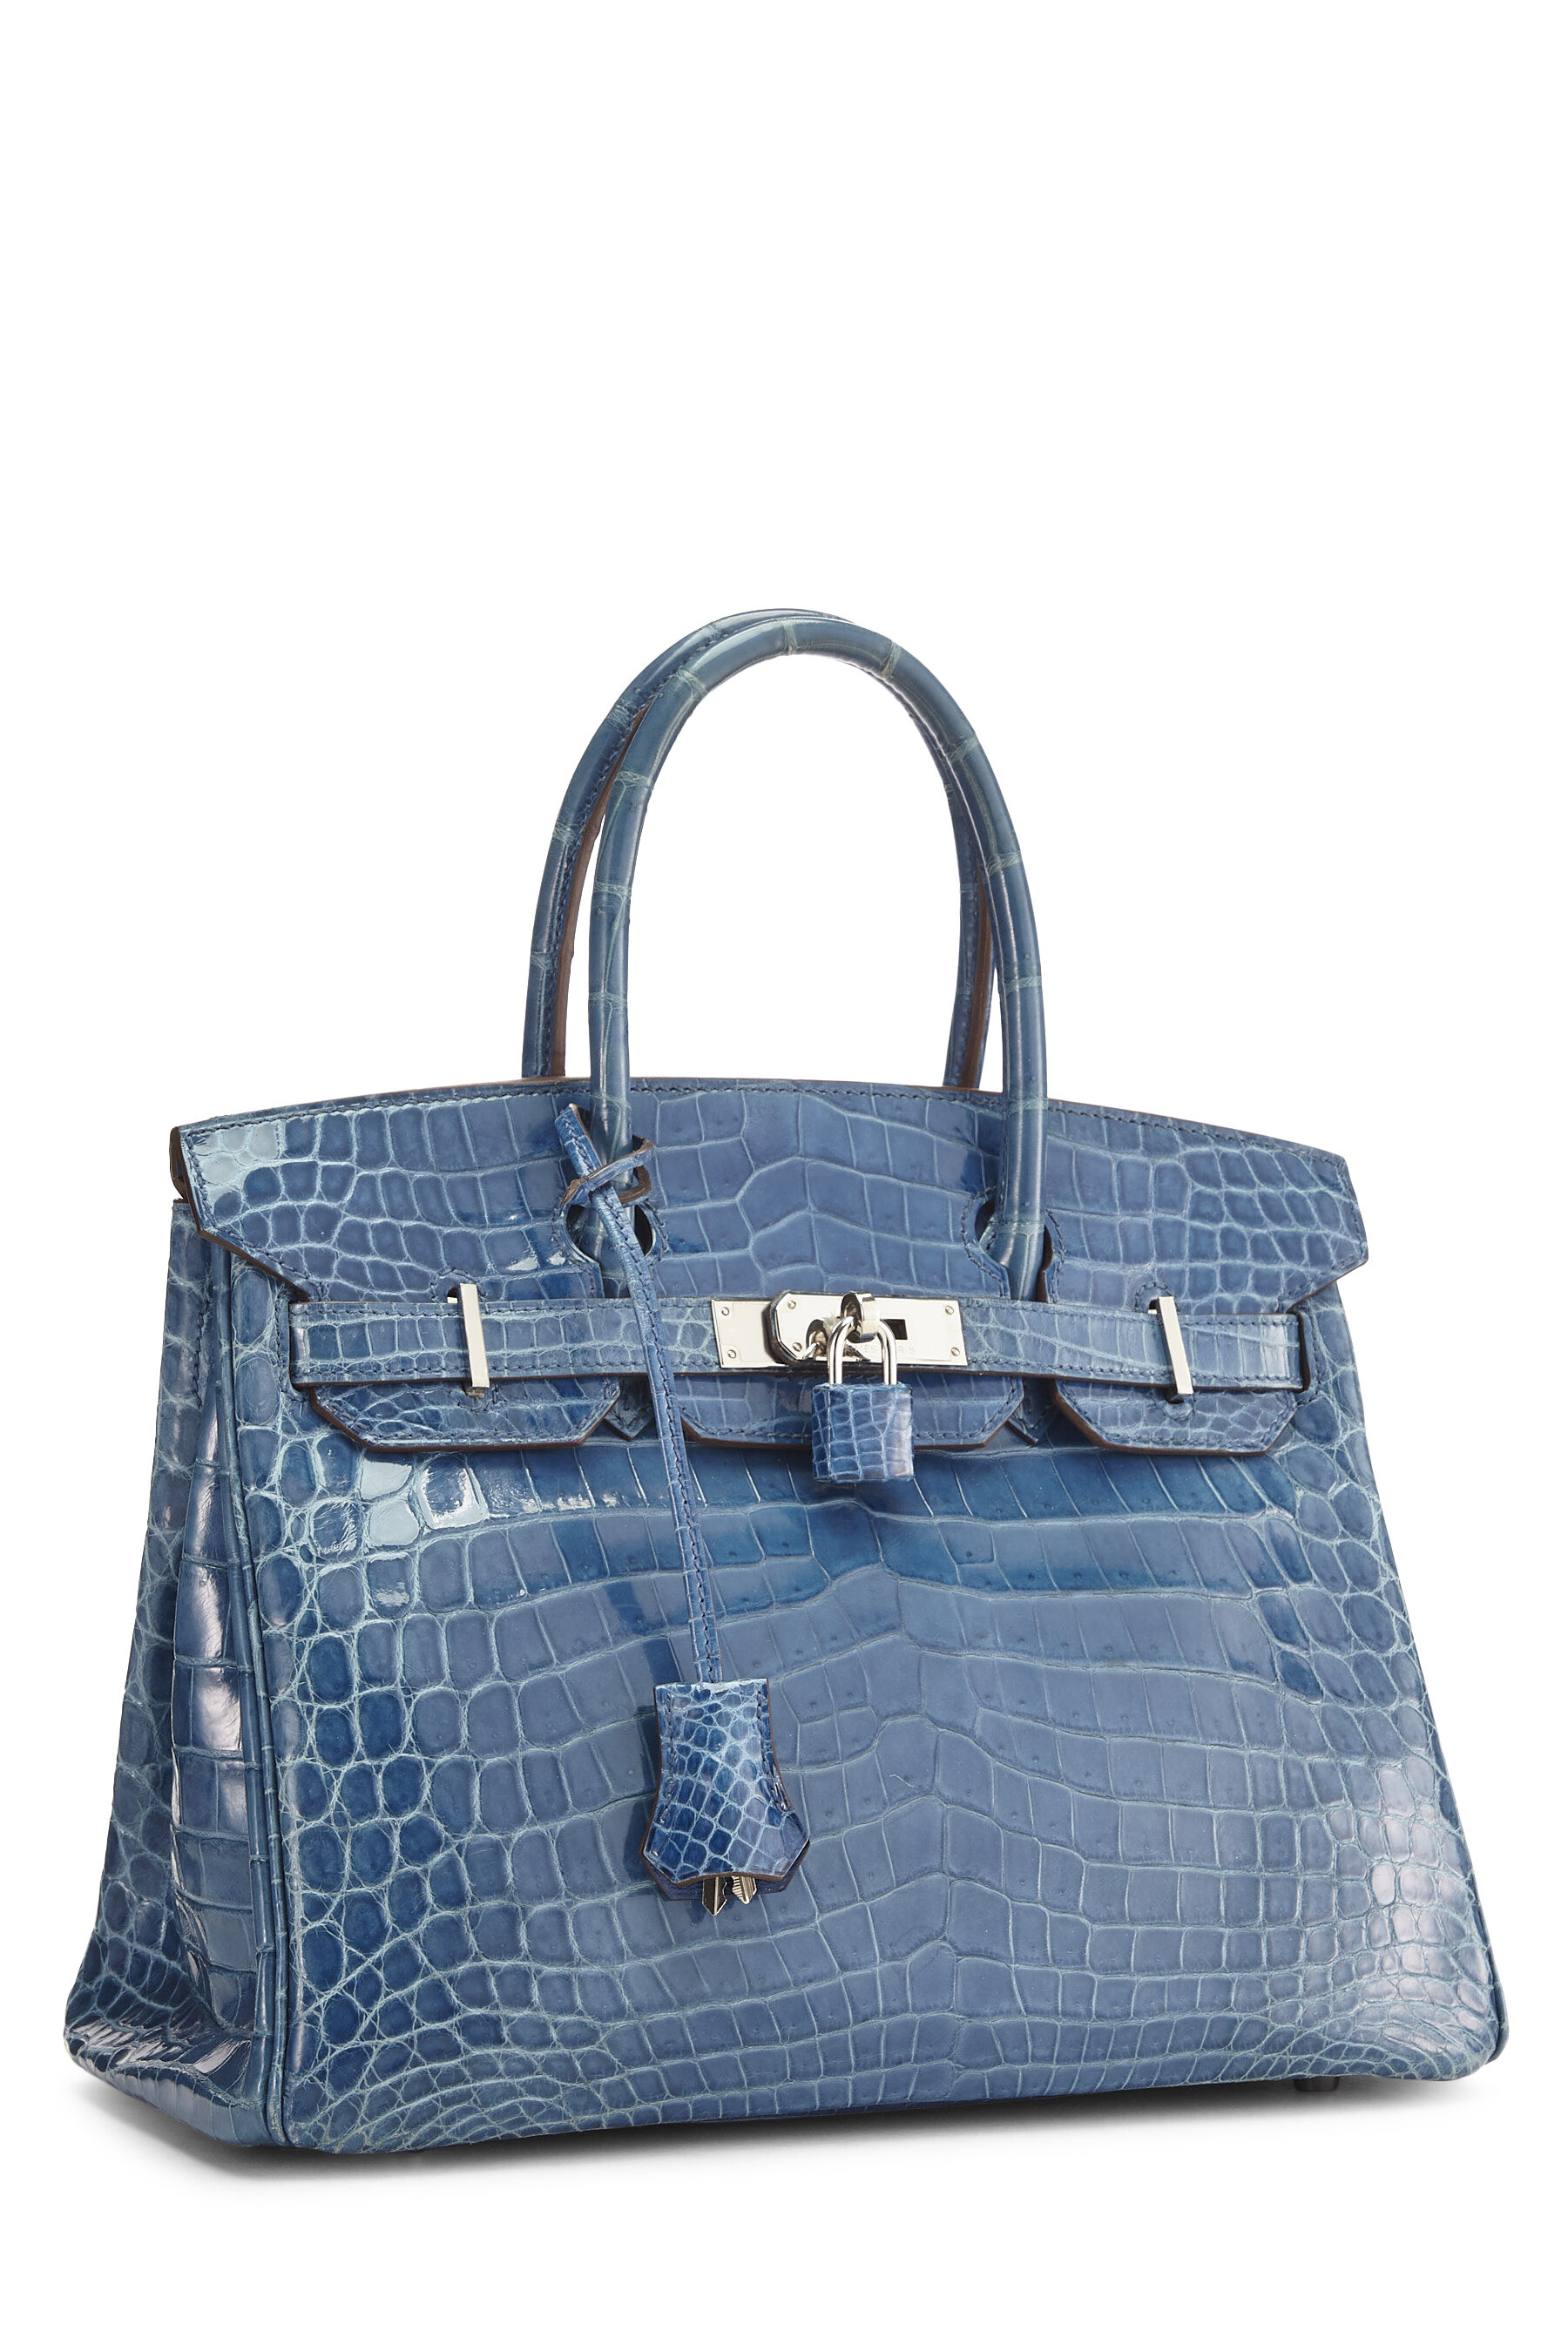 Hermes 30cm Shiny Blue Brighton Porosus Crocodile Birkin Bag